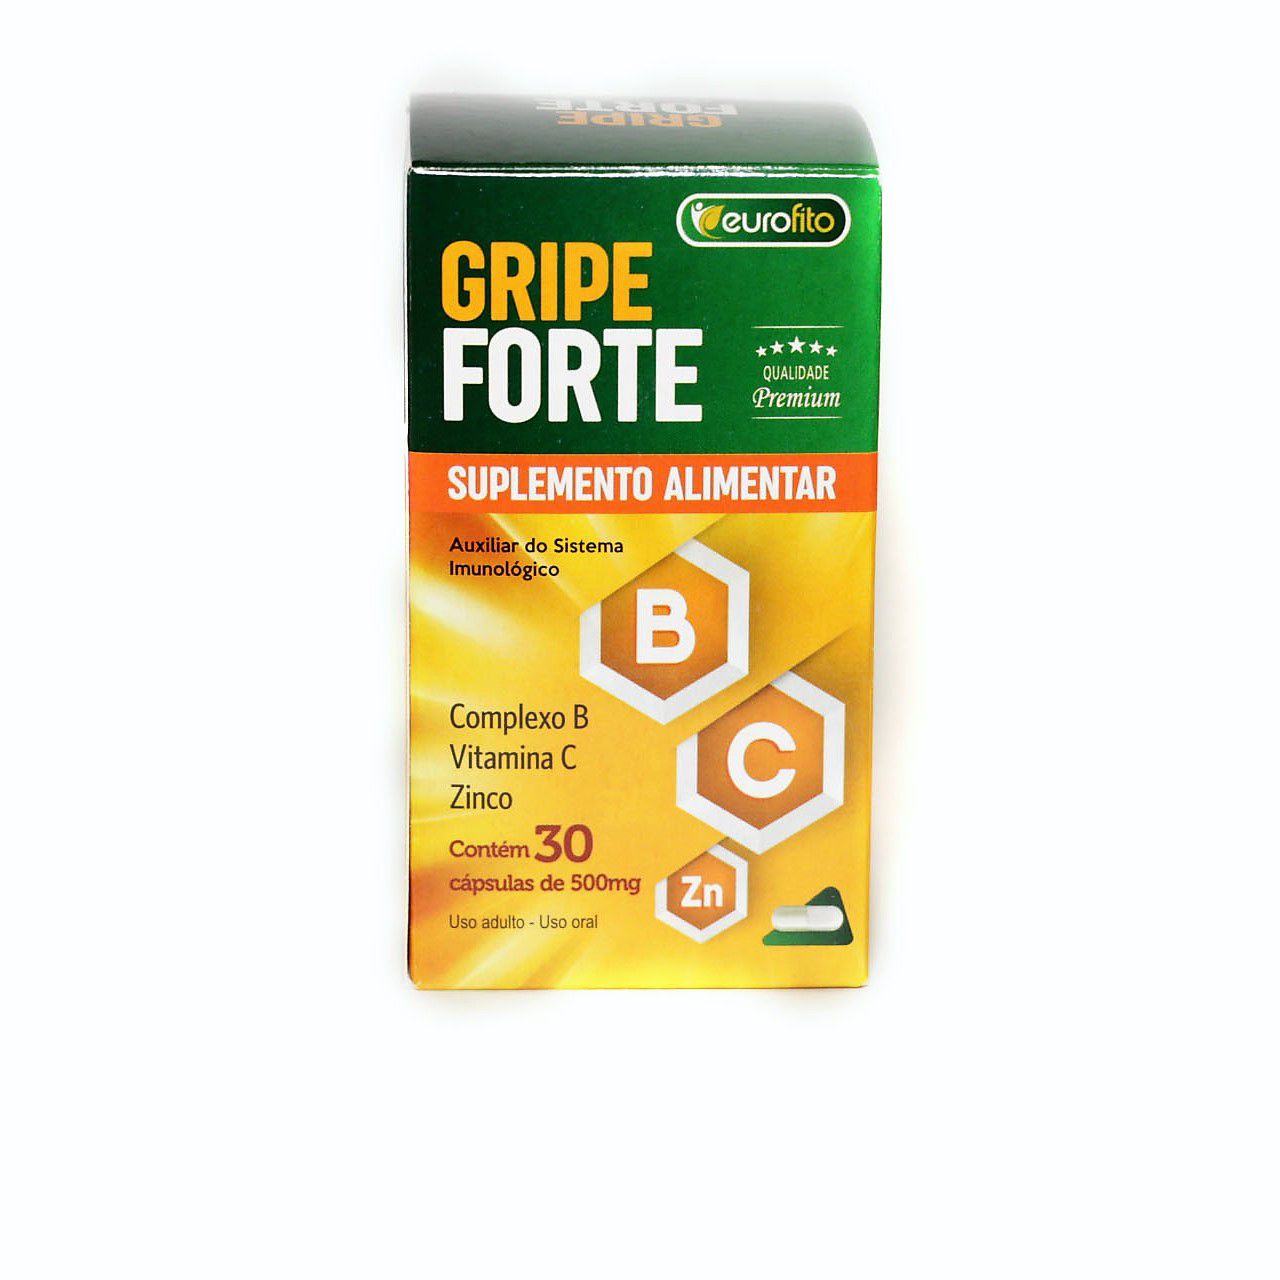 Gripe Forte 500mg (Complexo B, Vit C, Zinco) - 30 cápsulas - Eurofito